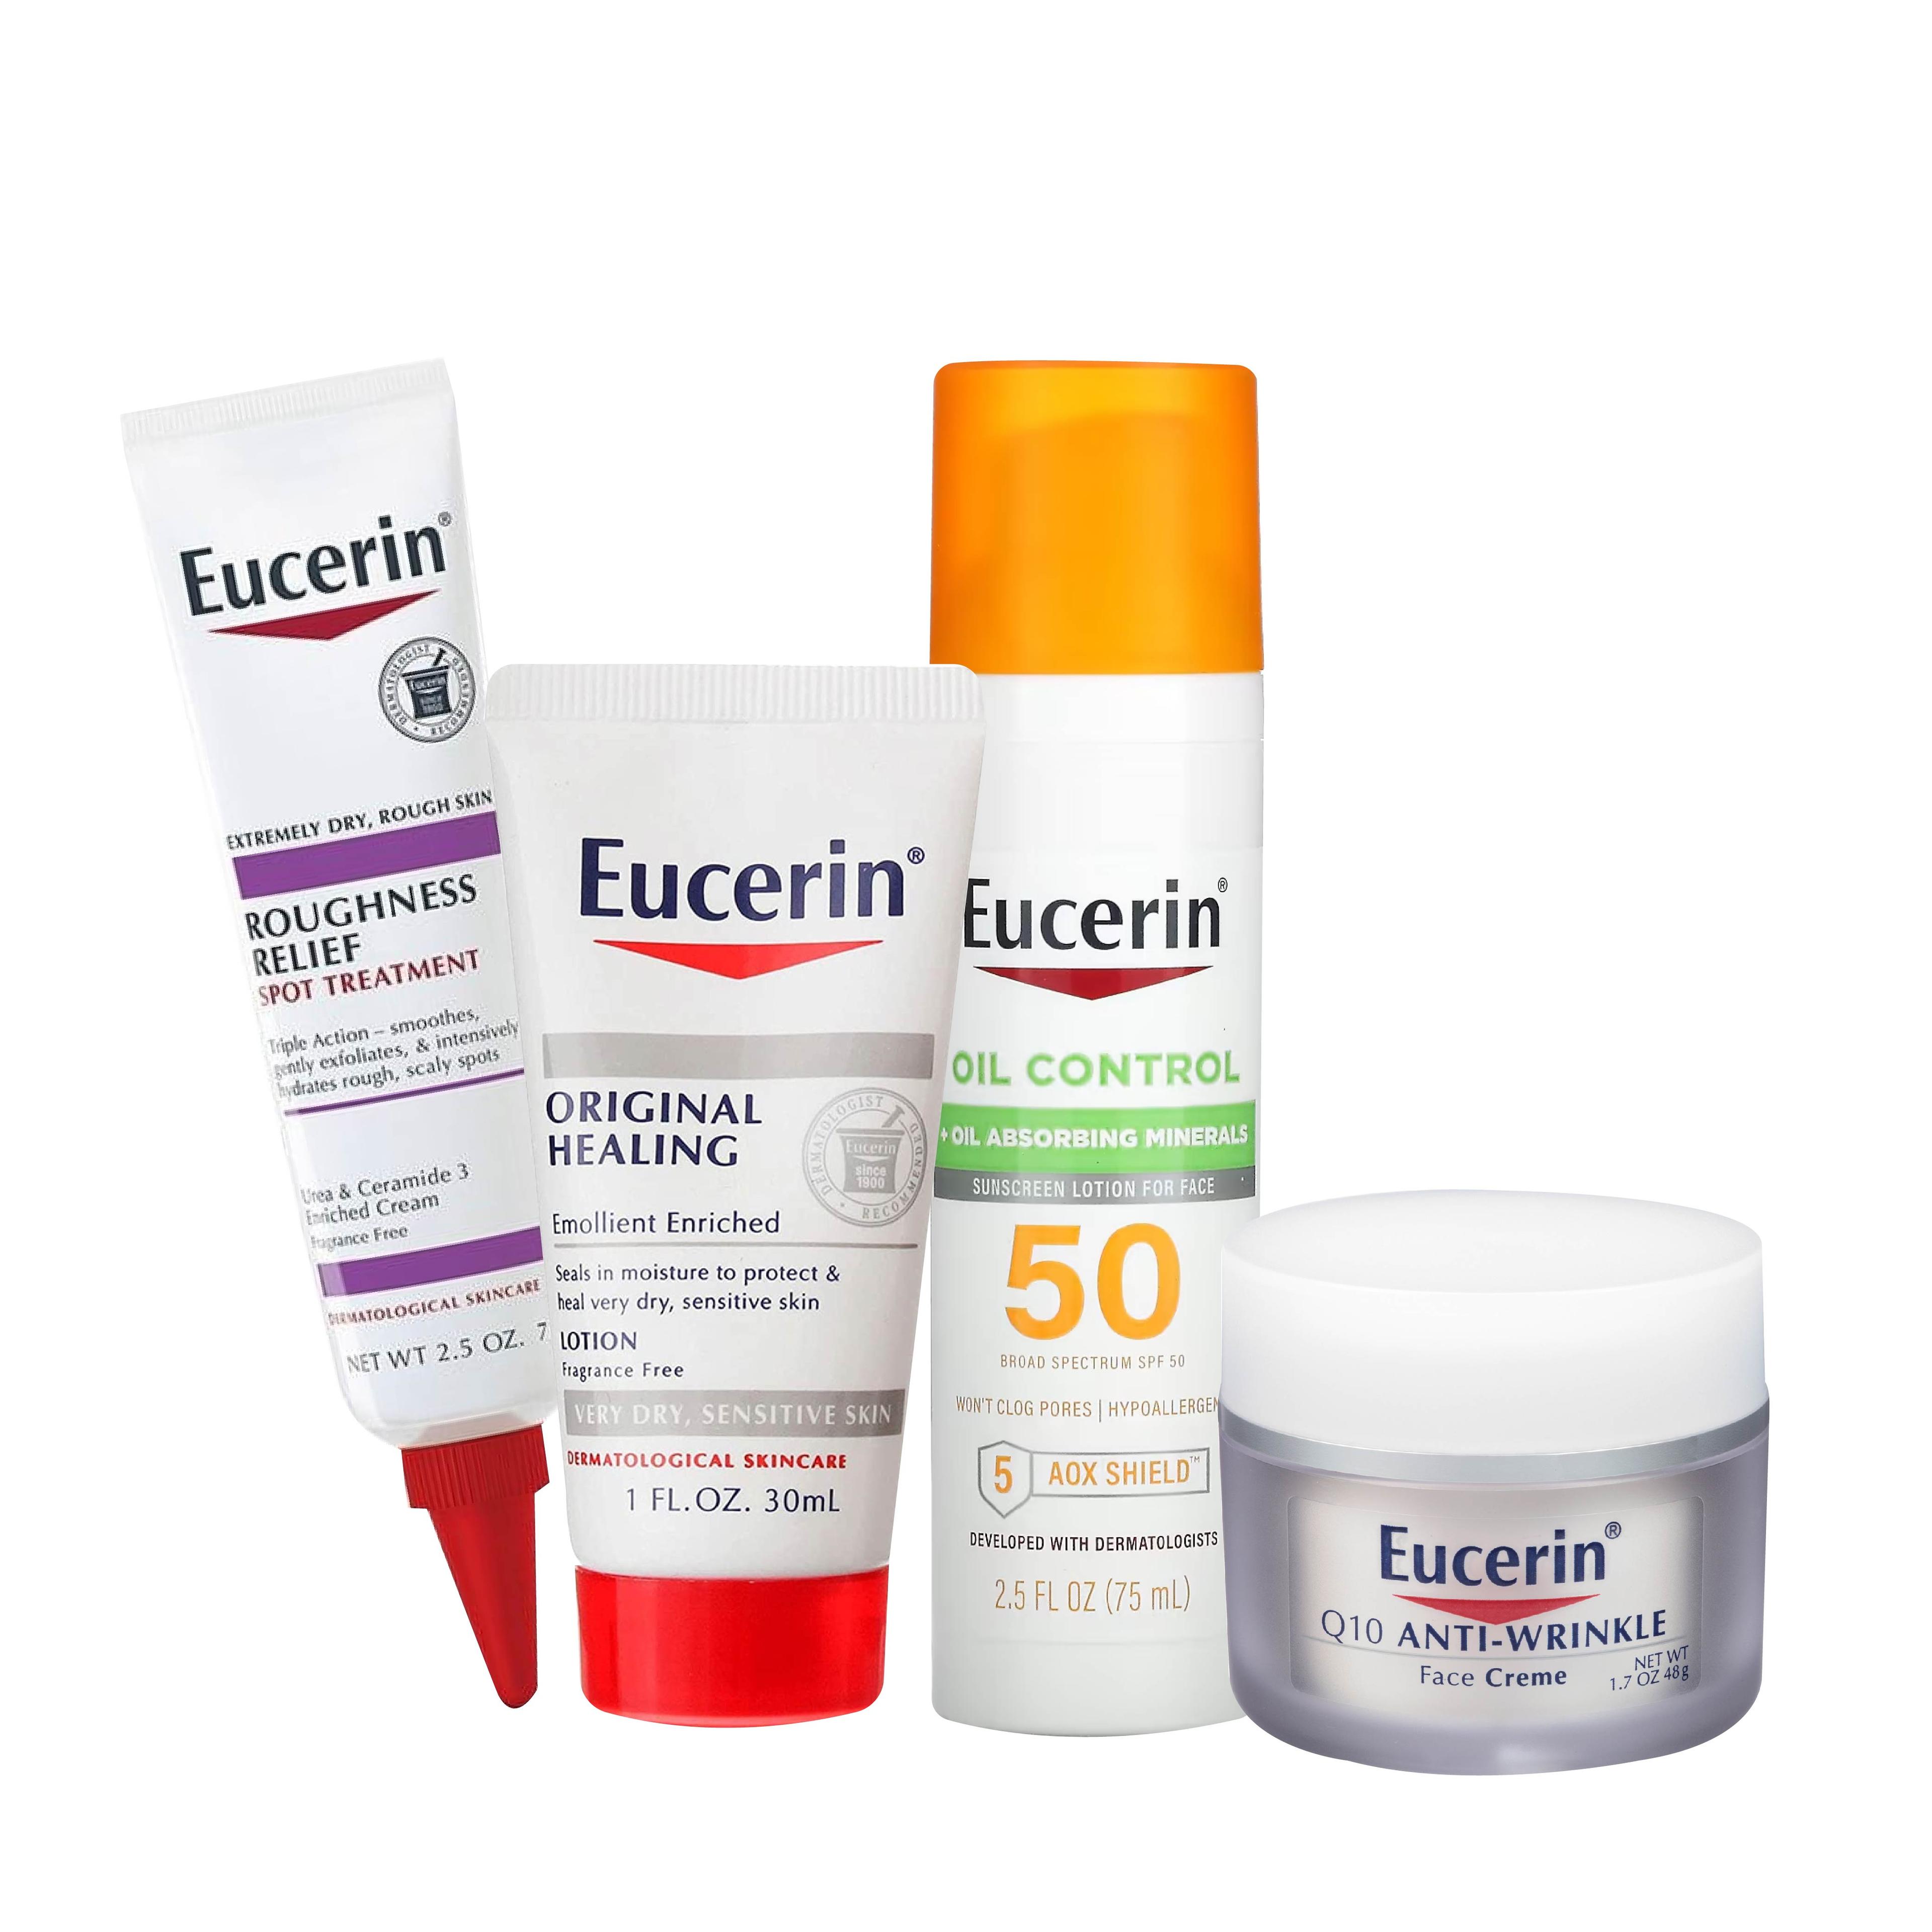 Eucerin 4 pcs Bundle Set [Roughness Relief Spot Treatment + Original Healing Lotion 30ml + Oil Control Lightweight Sunscreen Lotion for Face SPF 50 + Q10 Anti-Wrinkle Face Creme]